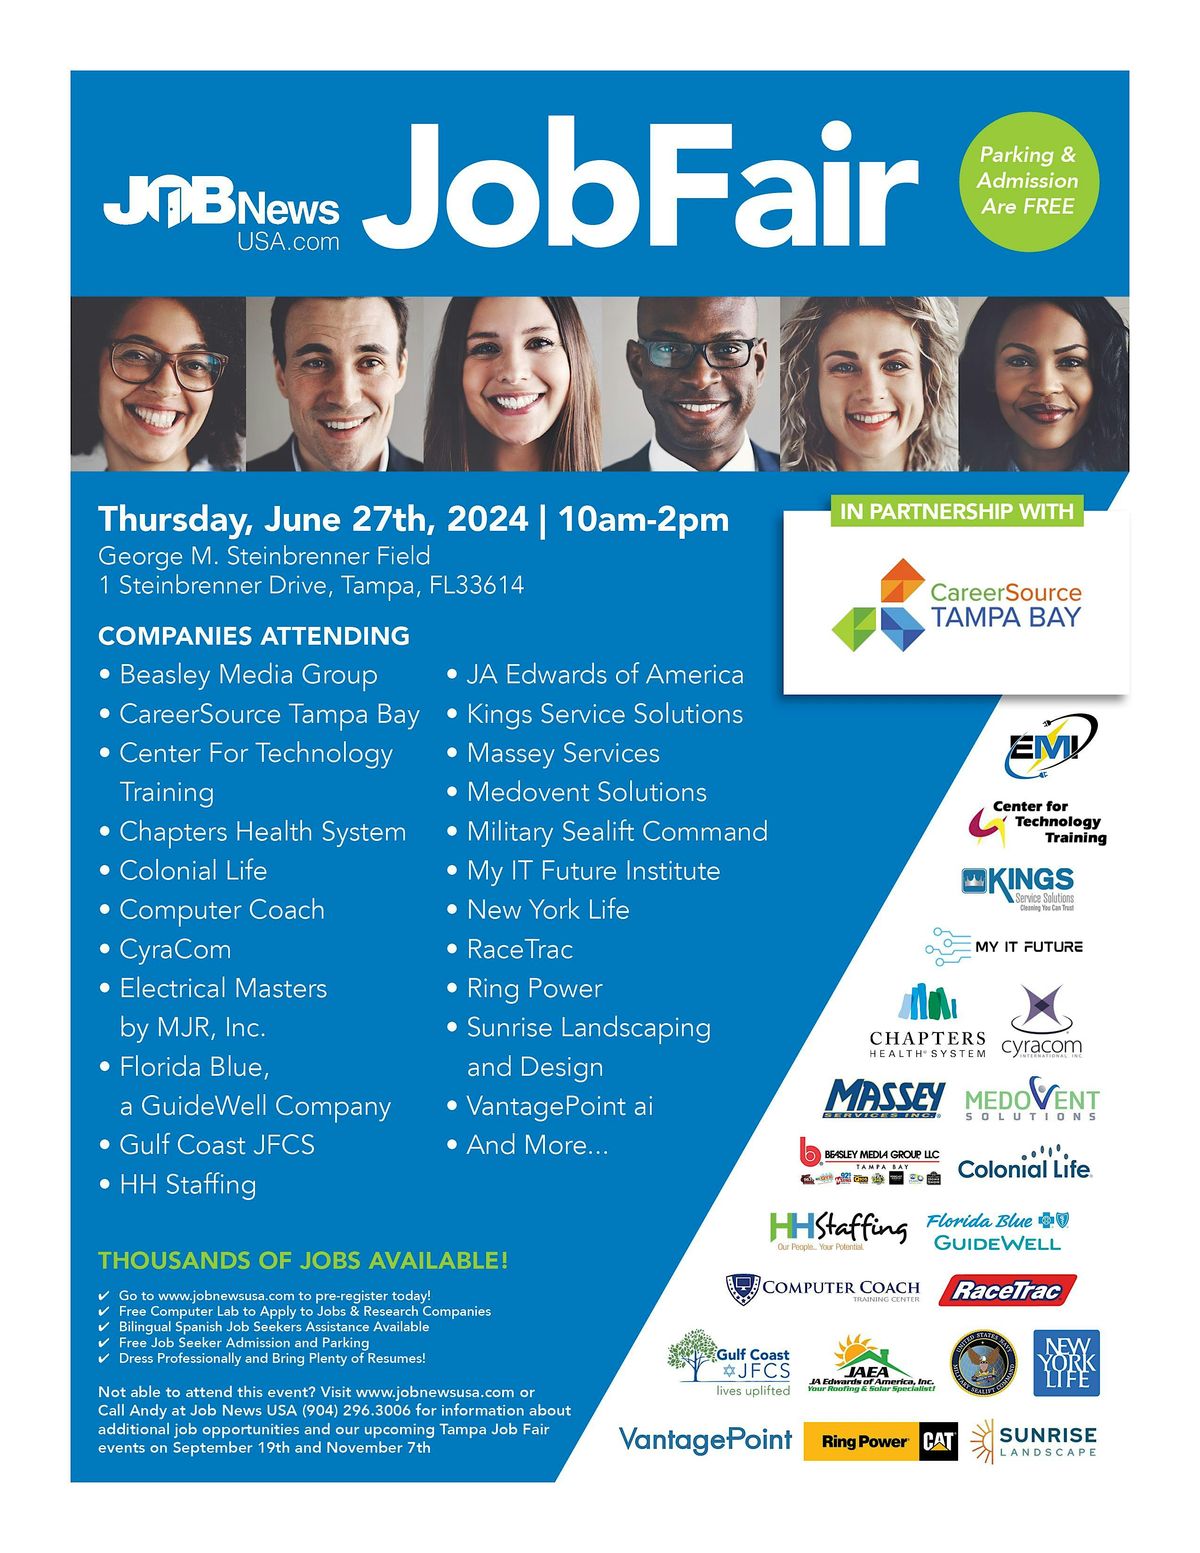 ** JOB FAIR - 25 Companies Hiring  for OVER 1,000 JOBS on June 27th